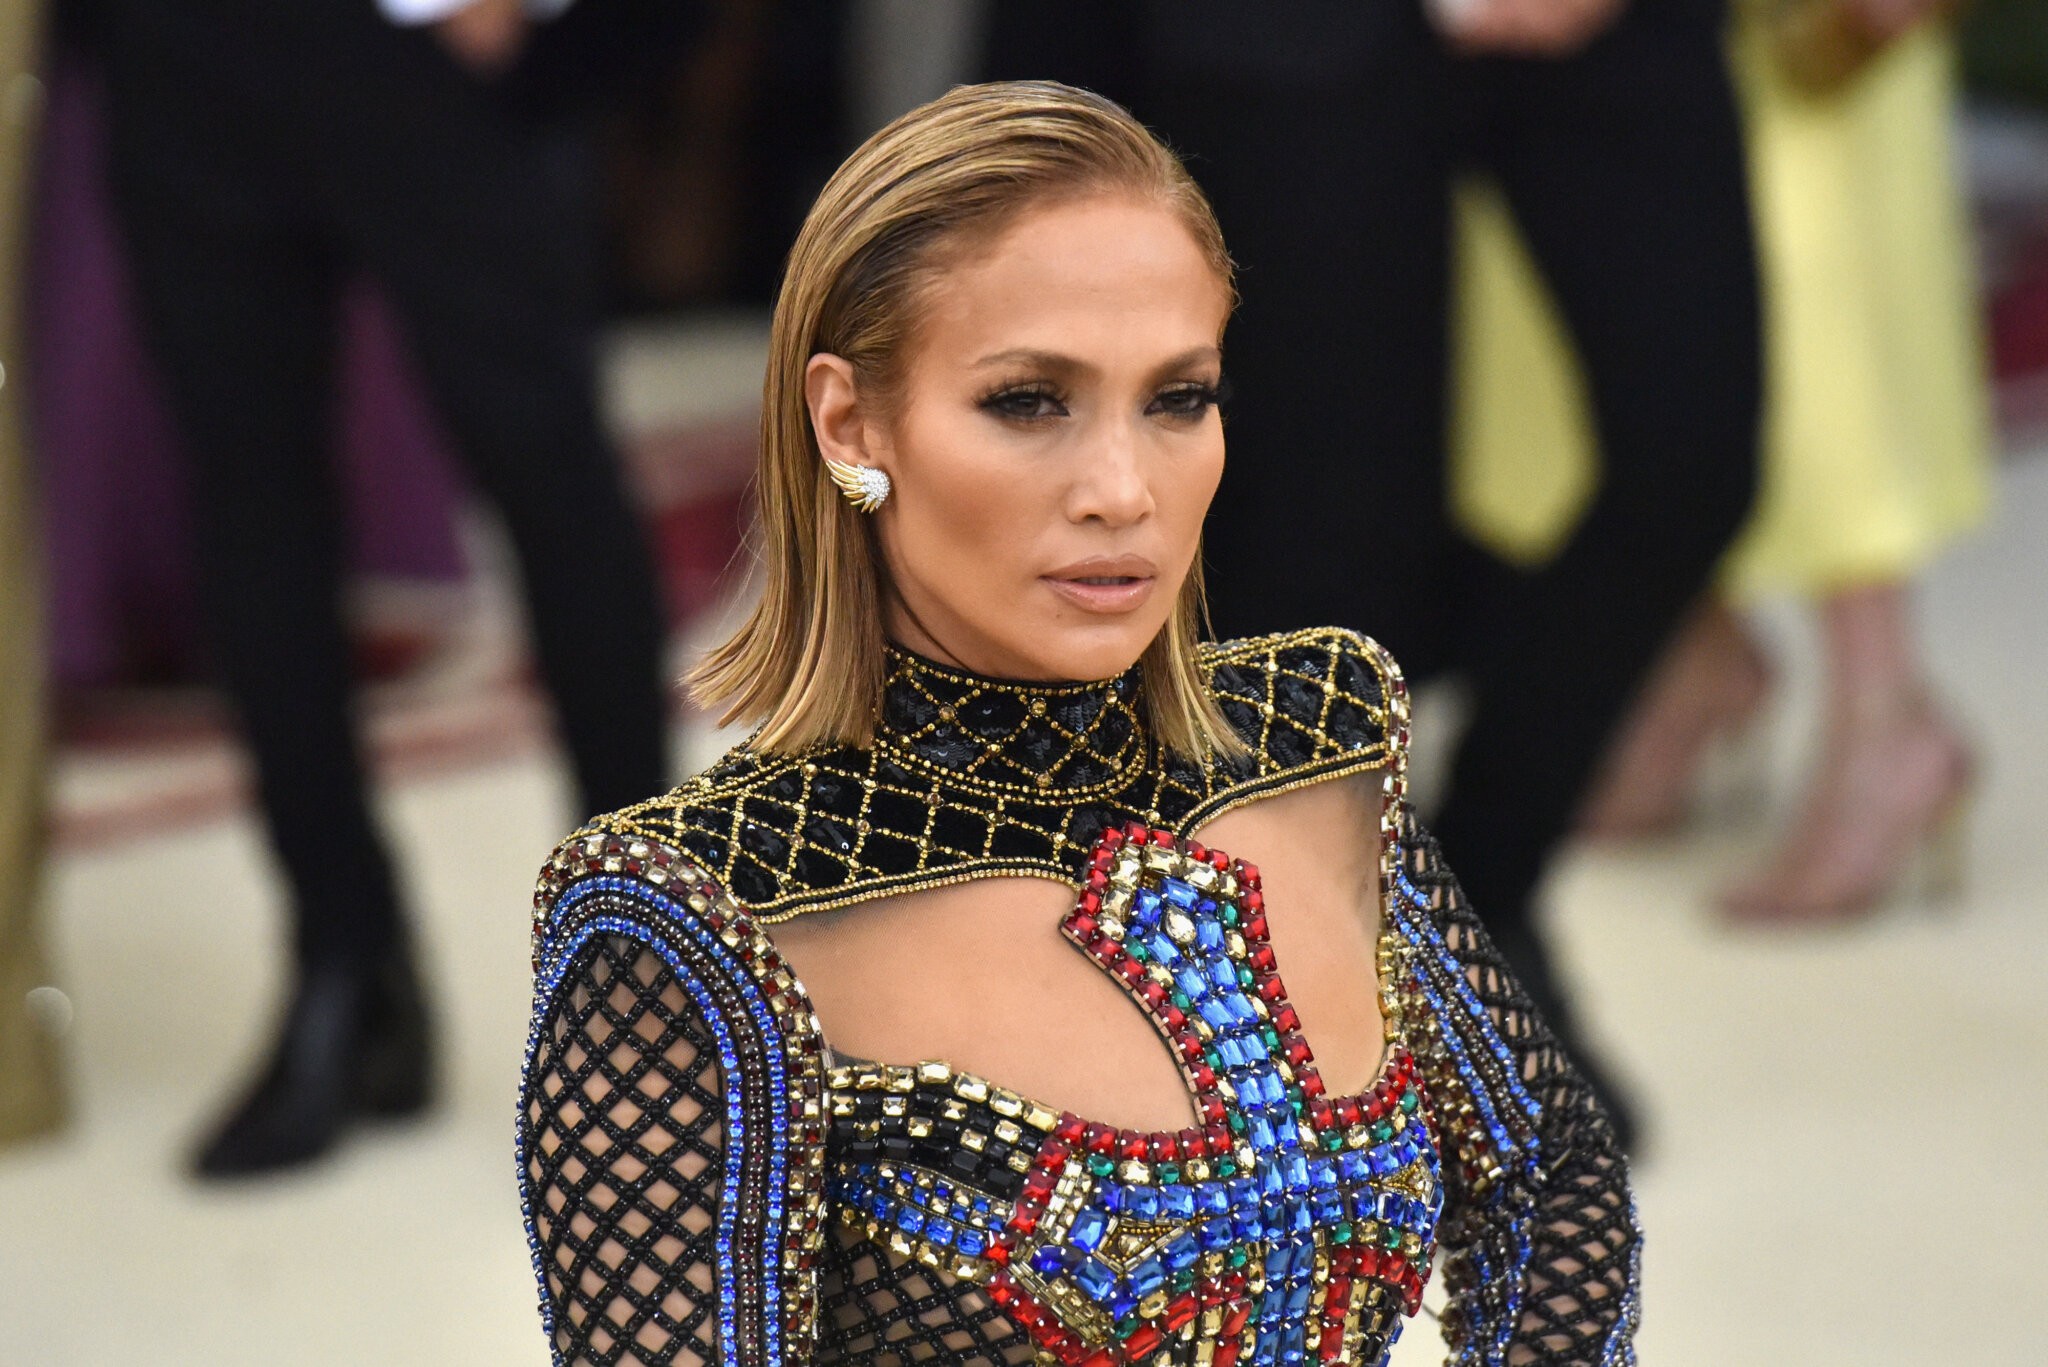 Jennifer Lopez wears Balmain for "Heavenly Bodies: Fashion & The Catholic Imagination" at the 2018 Met Gala